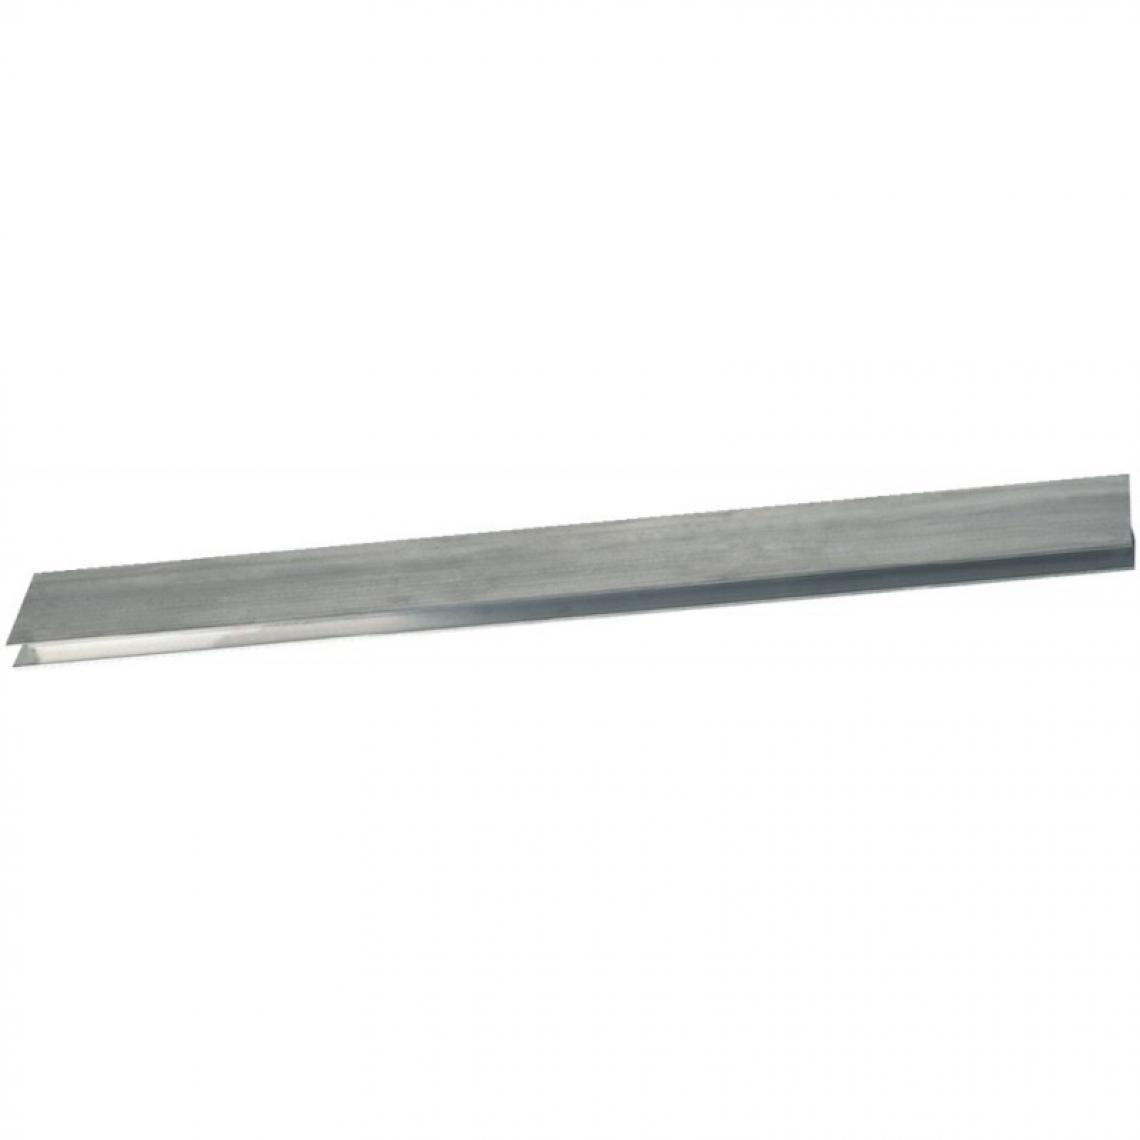 marque generique - Barre droit en aluminium profil h 2,5 m - Appareils de mesure